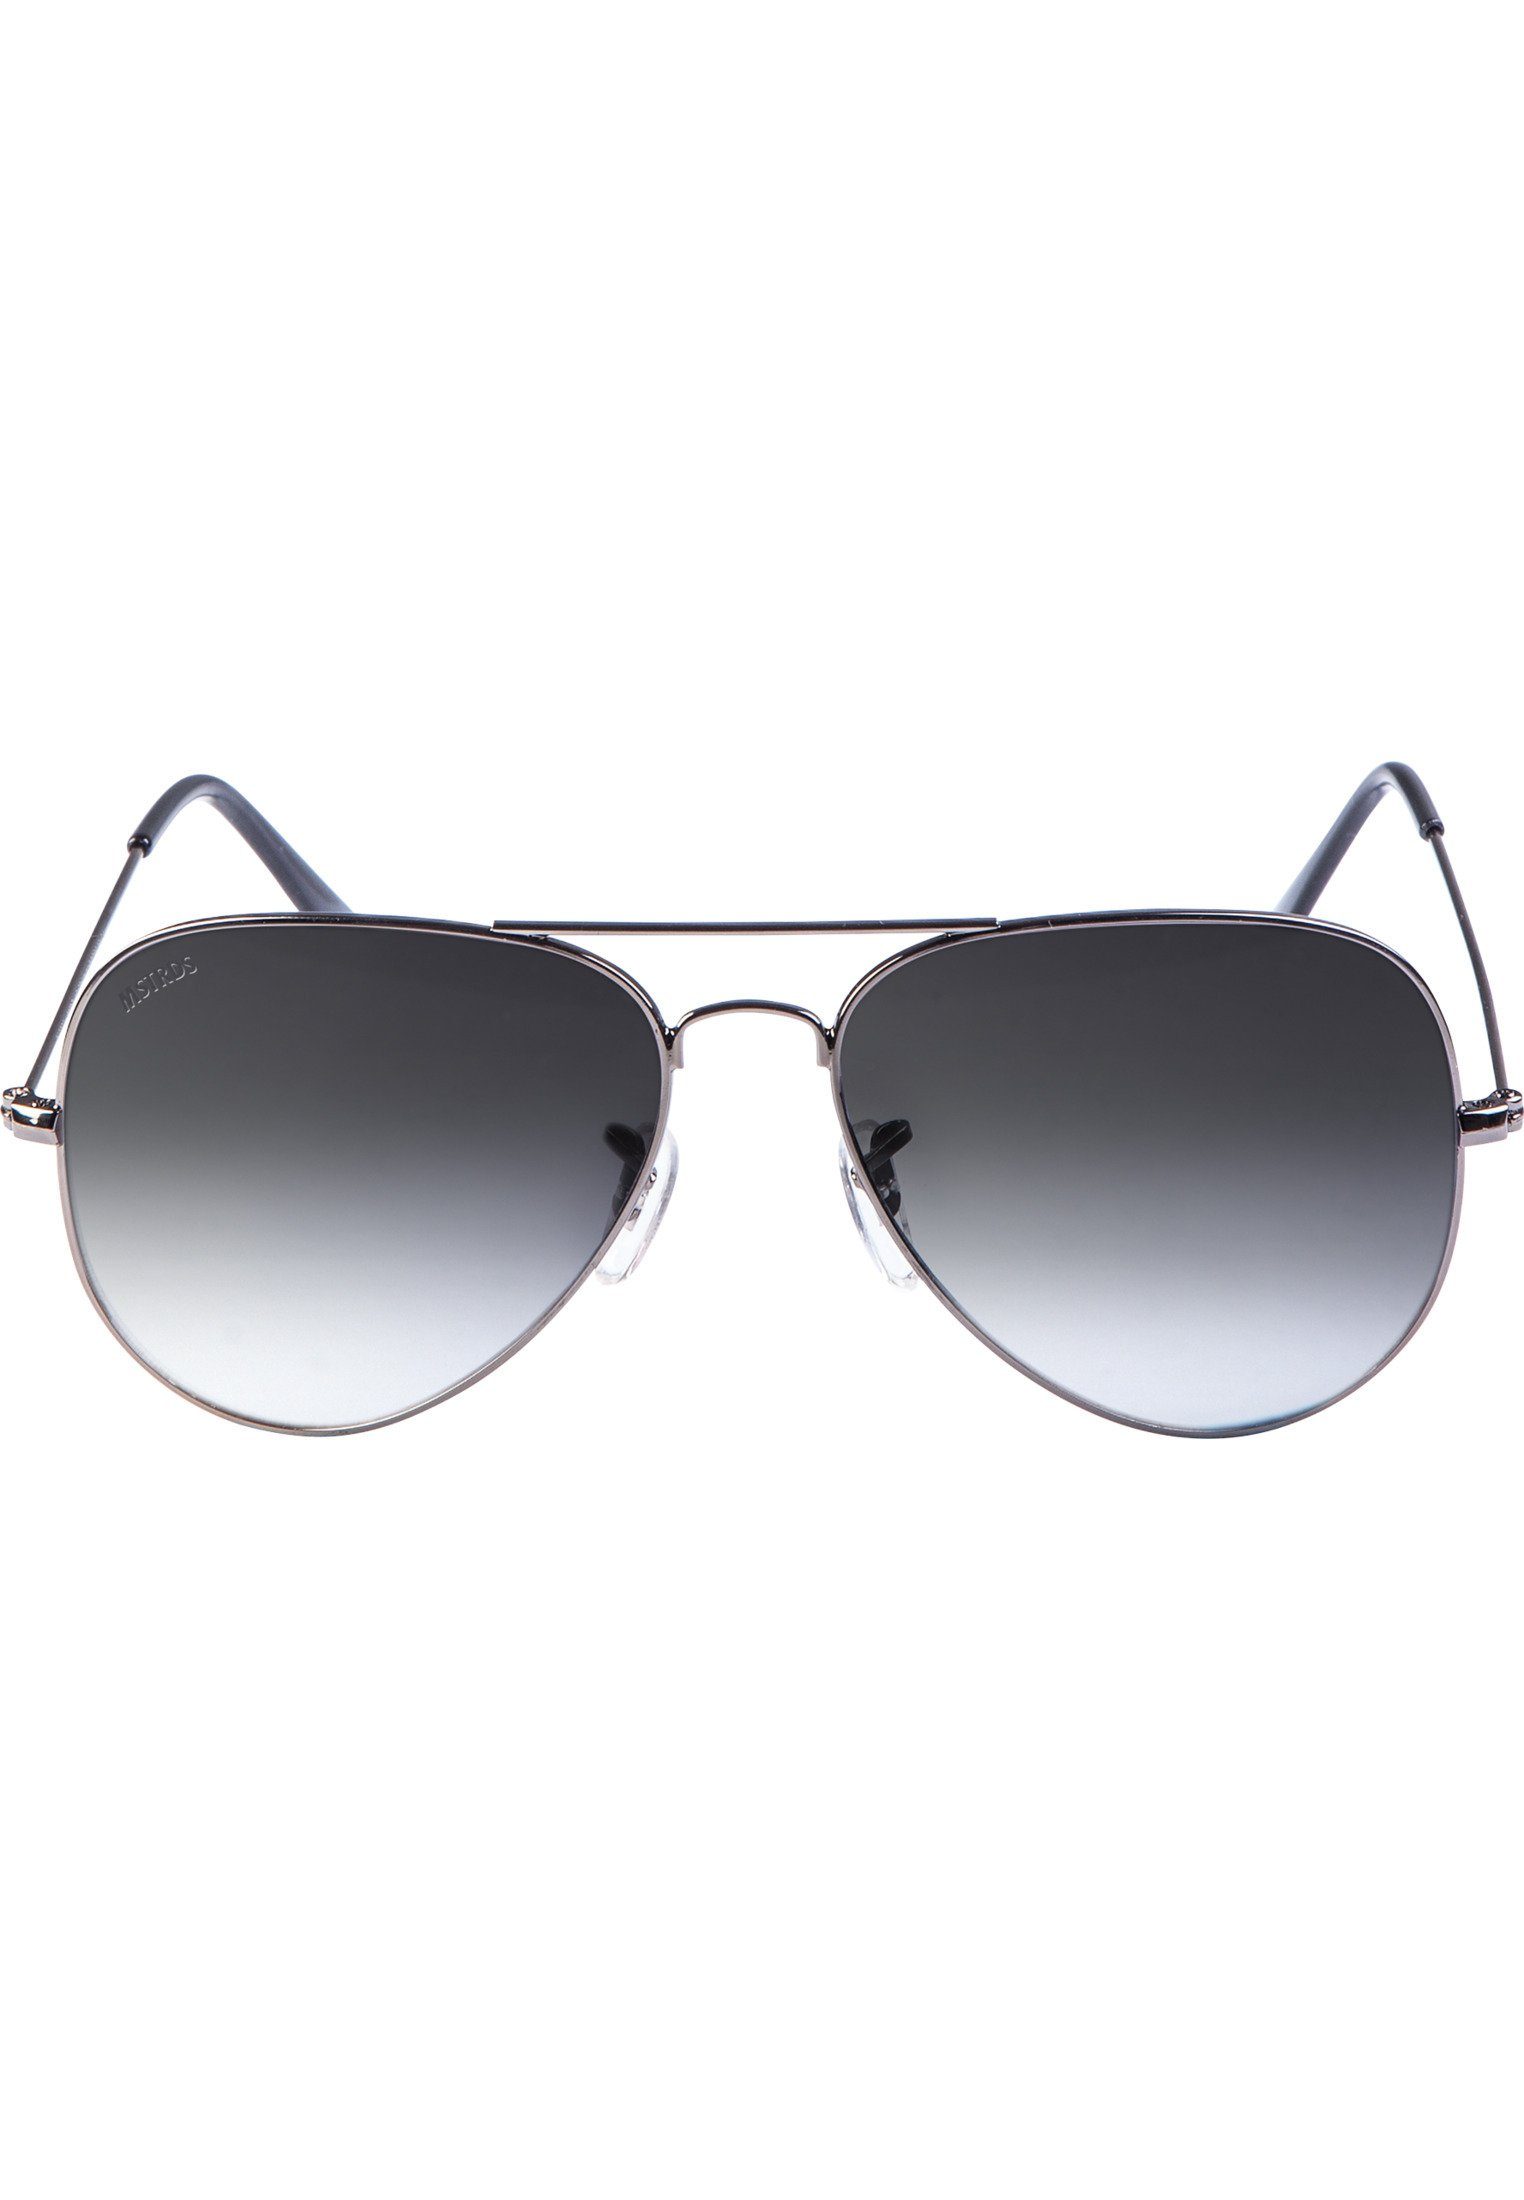 MSTRDS Sonnenbrille Accessoires Sunglasses PureAv Youth gun/grey | Sonnenbrillen